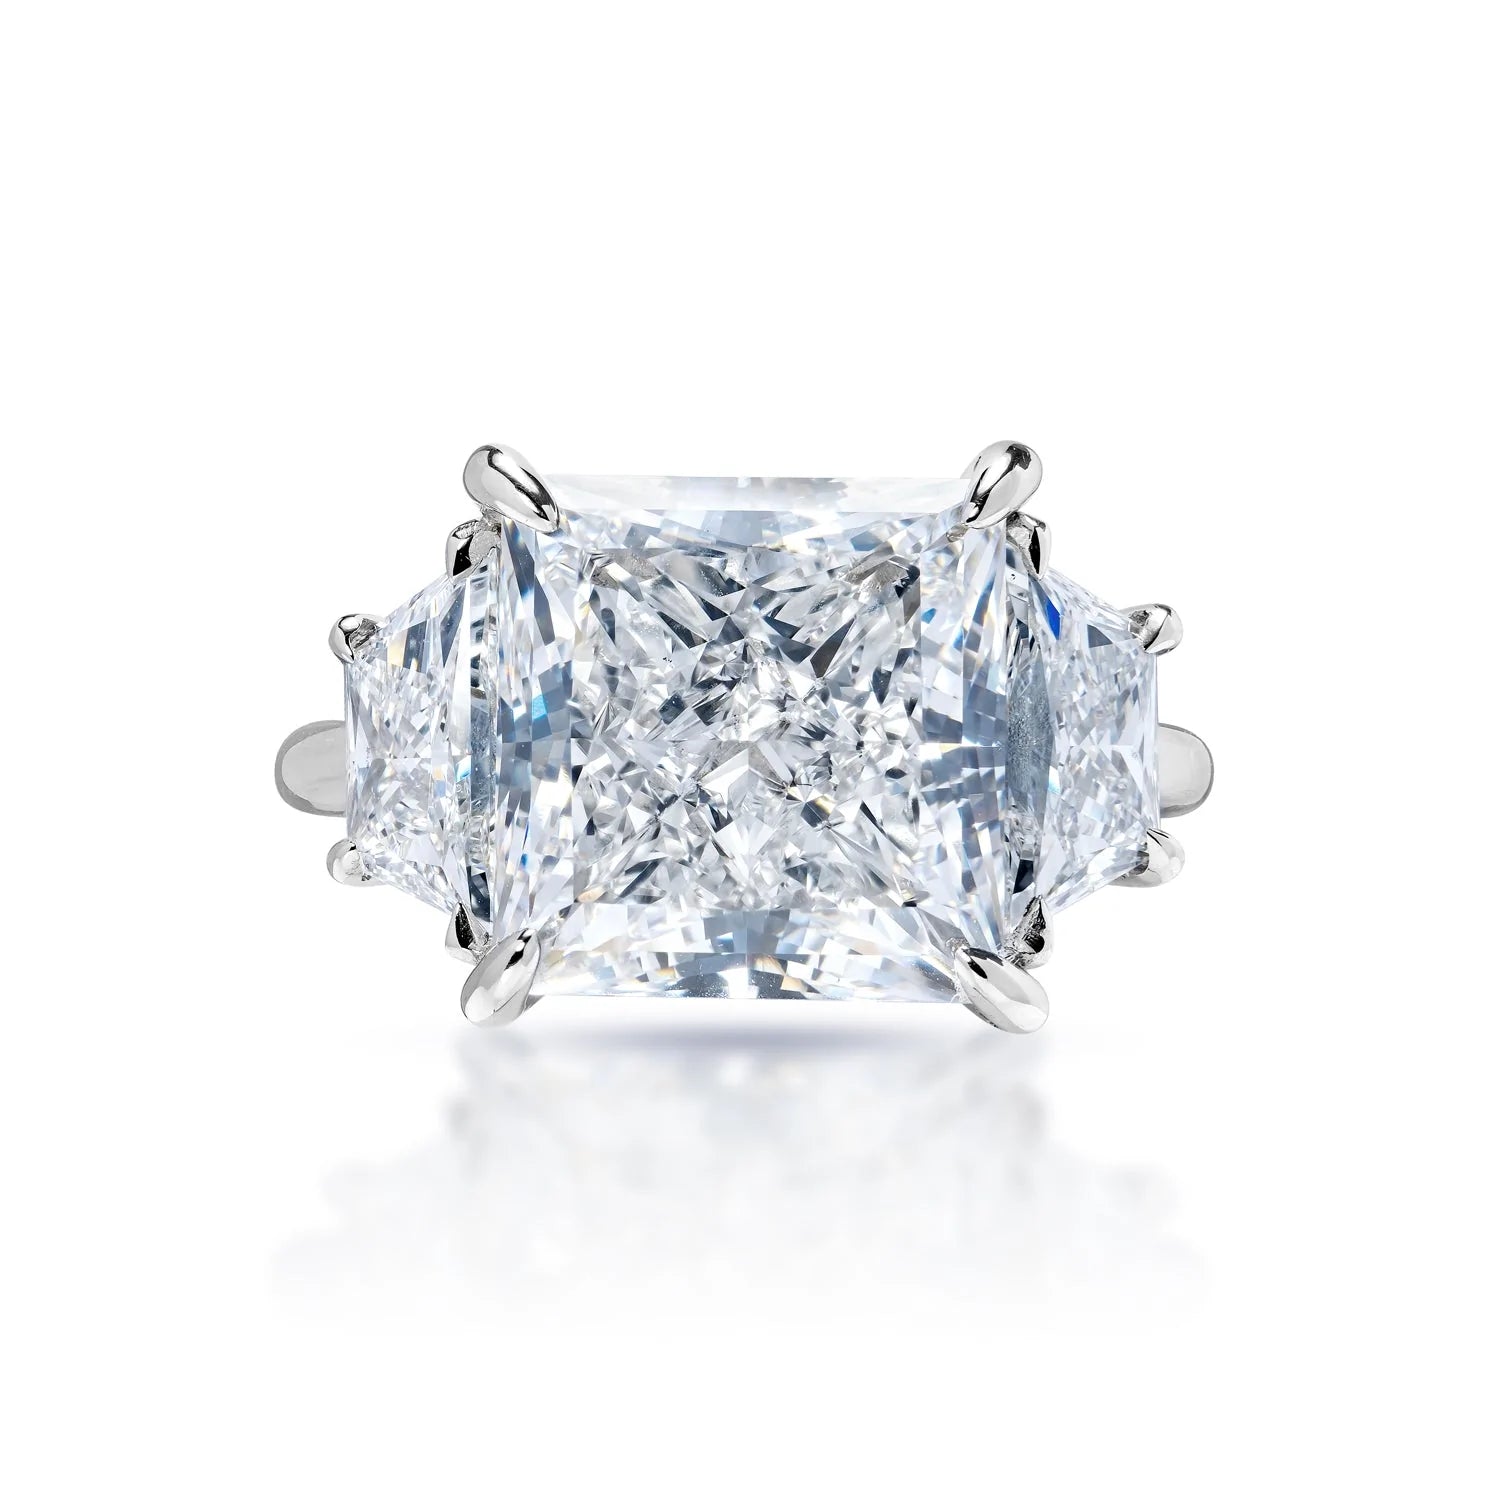 Leena 10 Carat F VS1 Princess Cut Lab Grown Diamond Engagement Ring in Platinum Front View